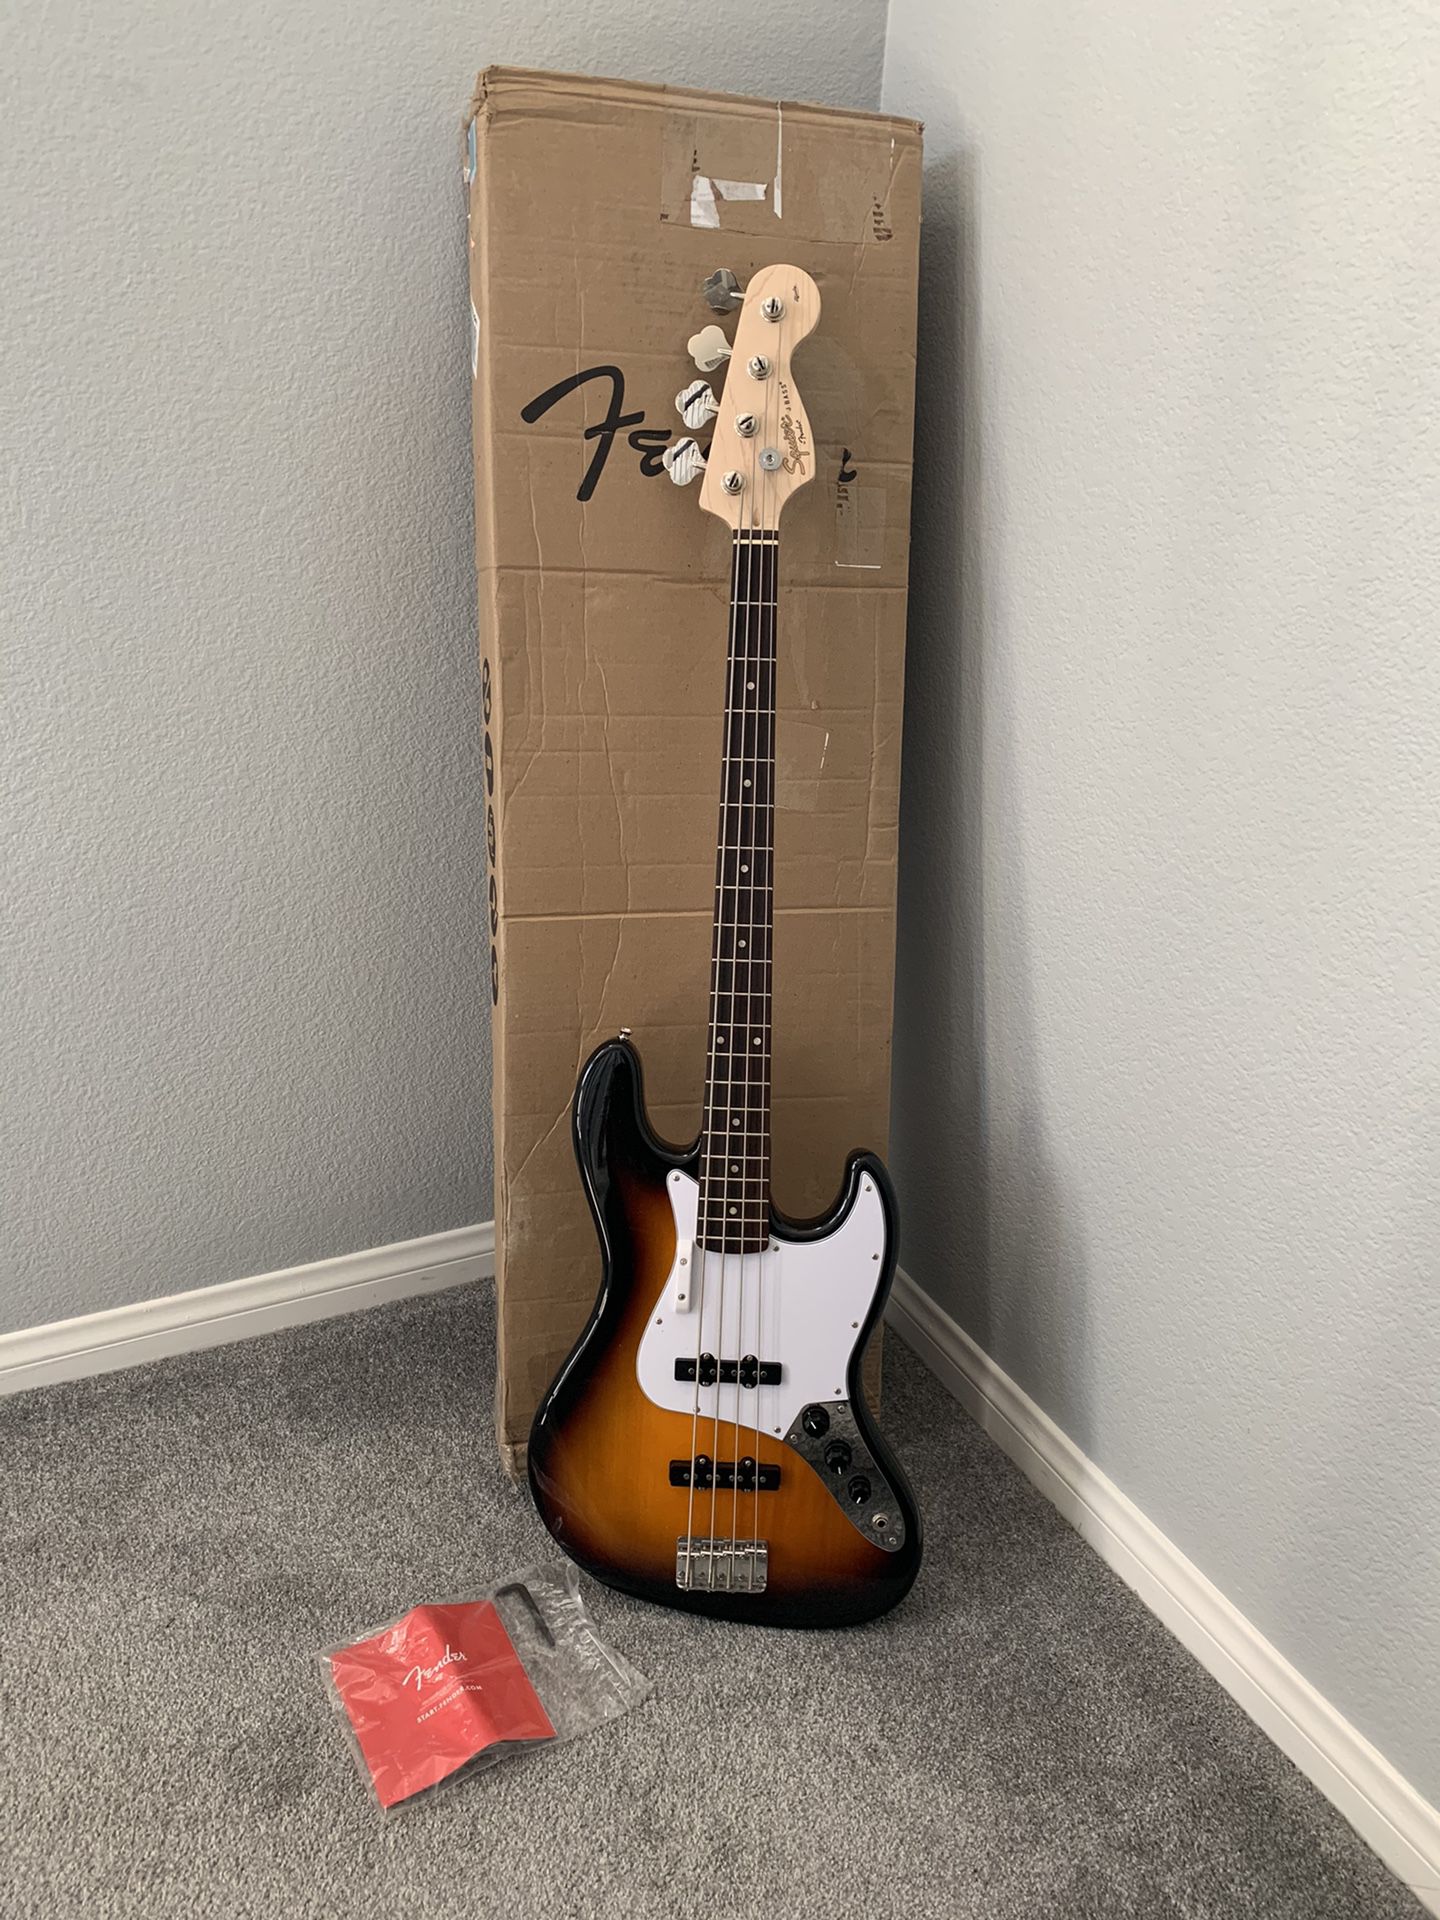 Fender Squier Affinity Series Jazz Bass Sunburst Guitar new open box